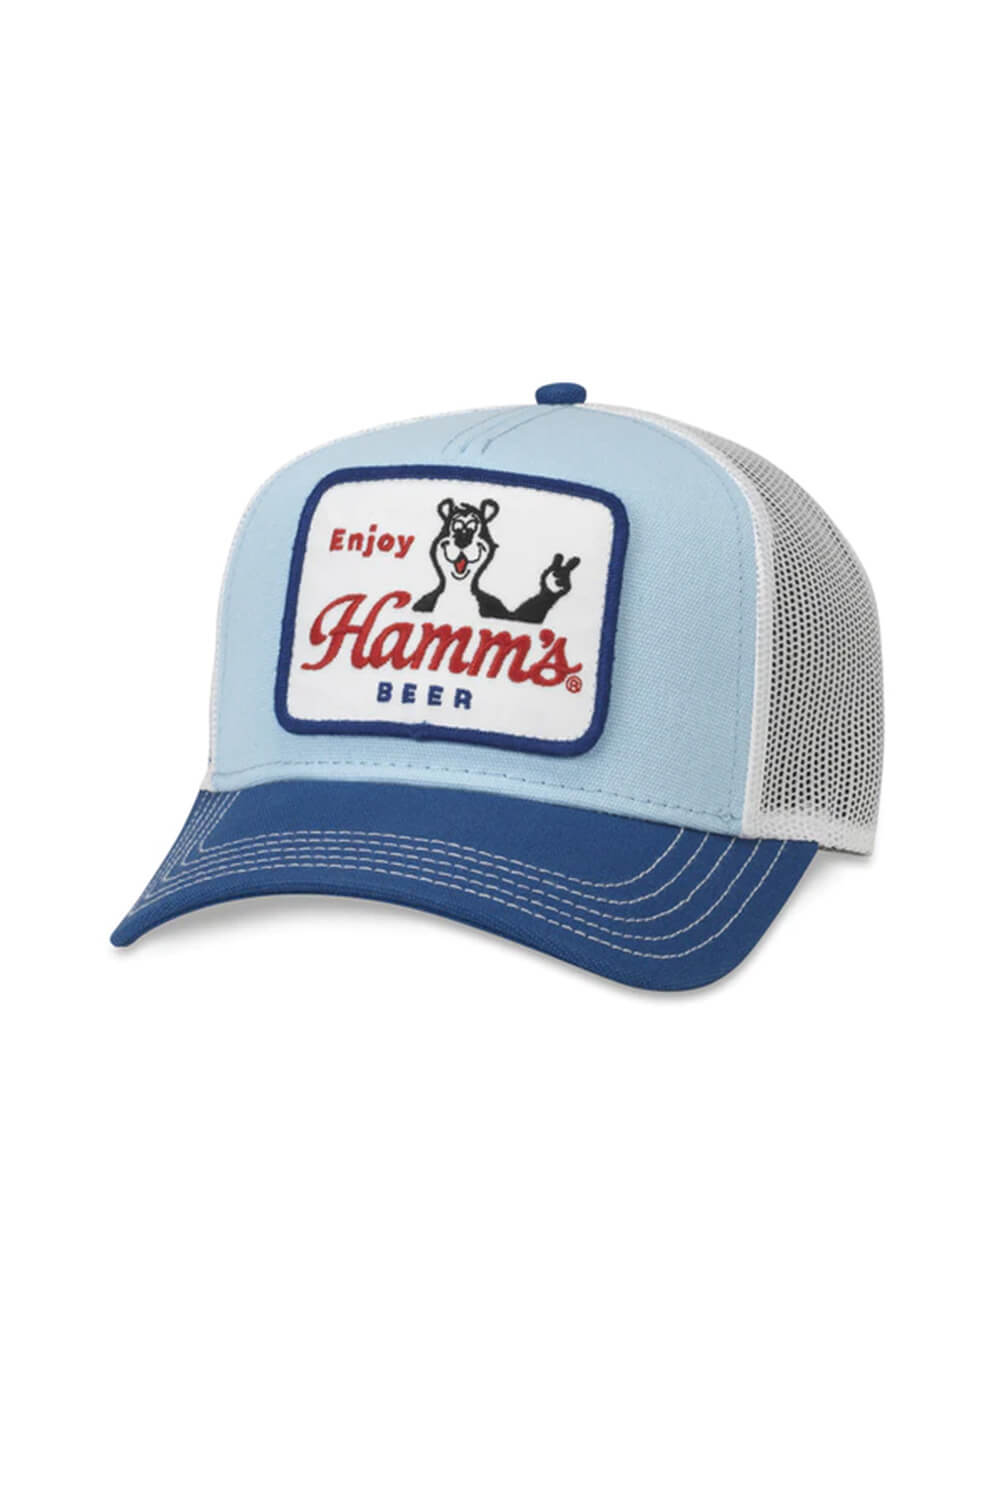 Hamm's Beer Snapback Trucker Hat by American Needle